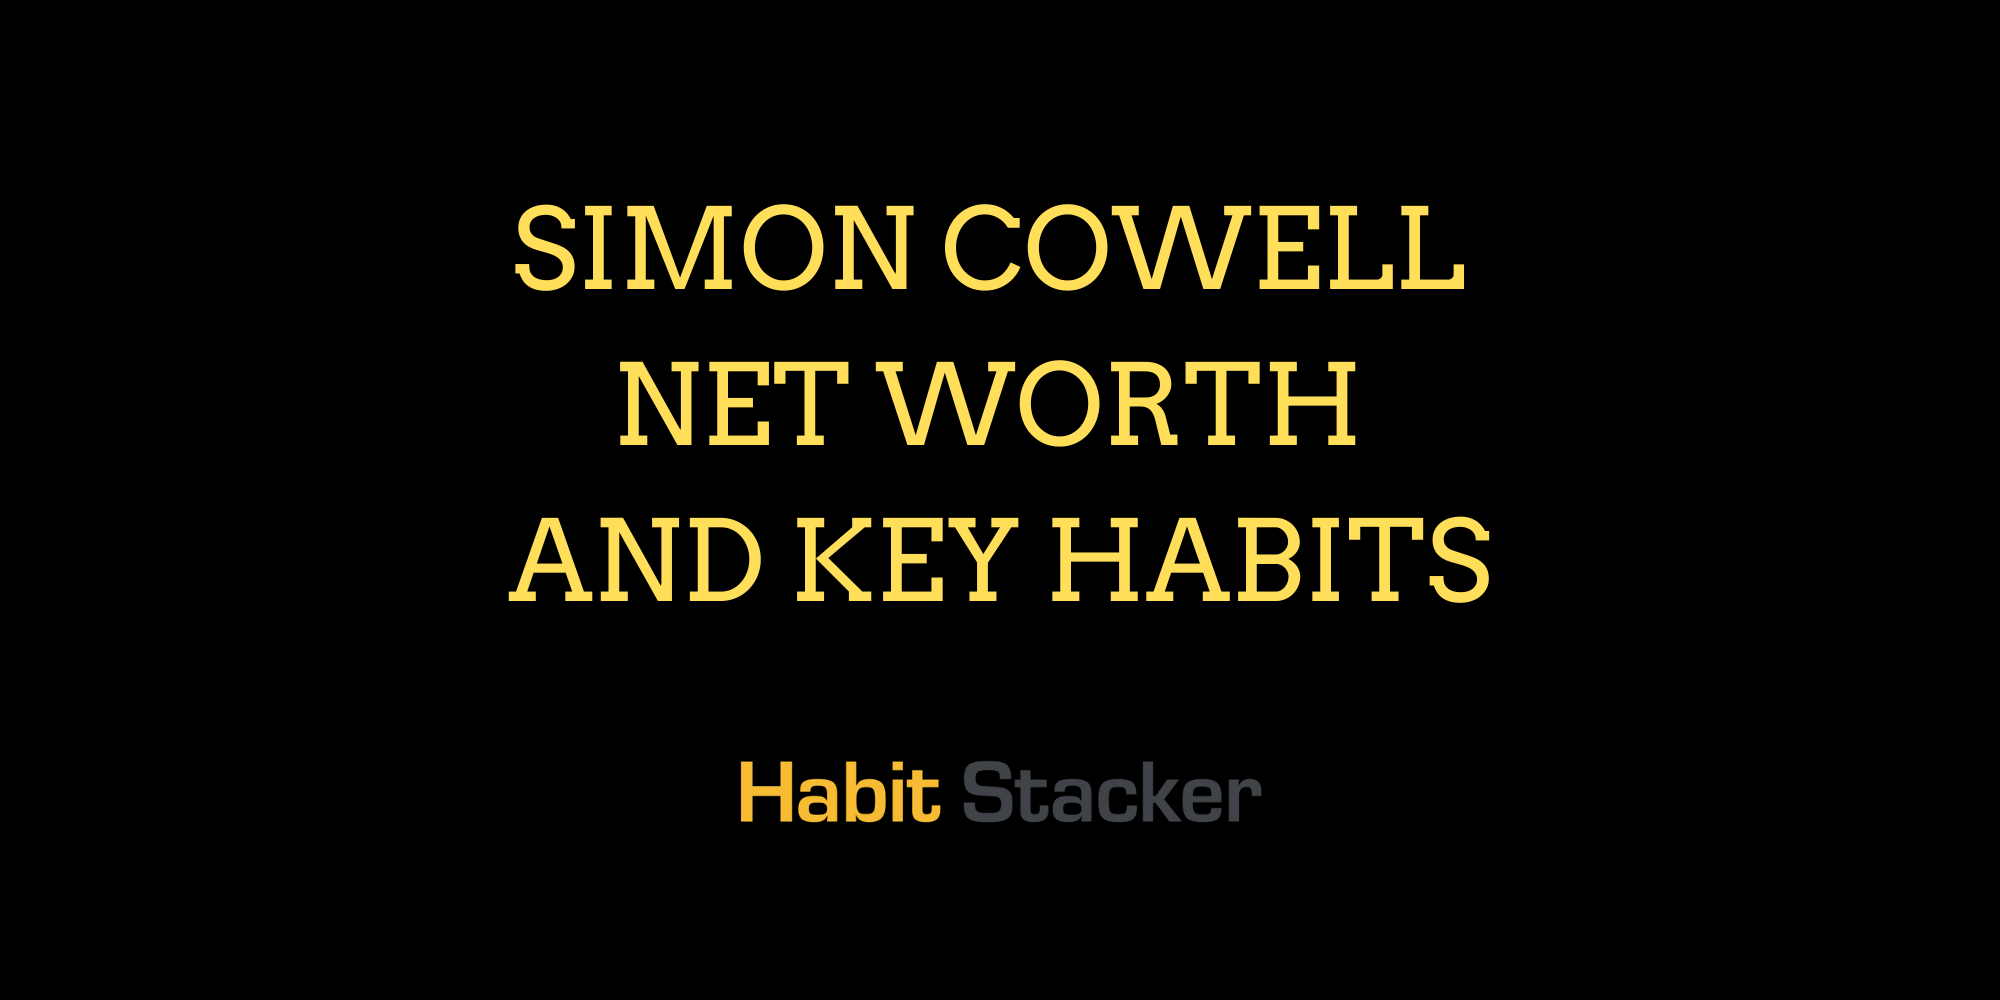 Simon Cowell Net Worth and Key Habits